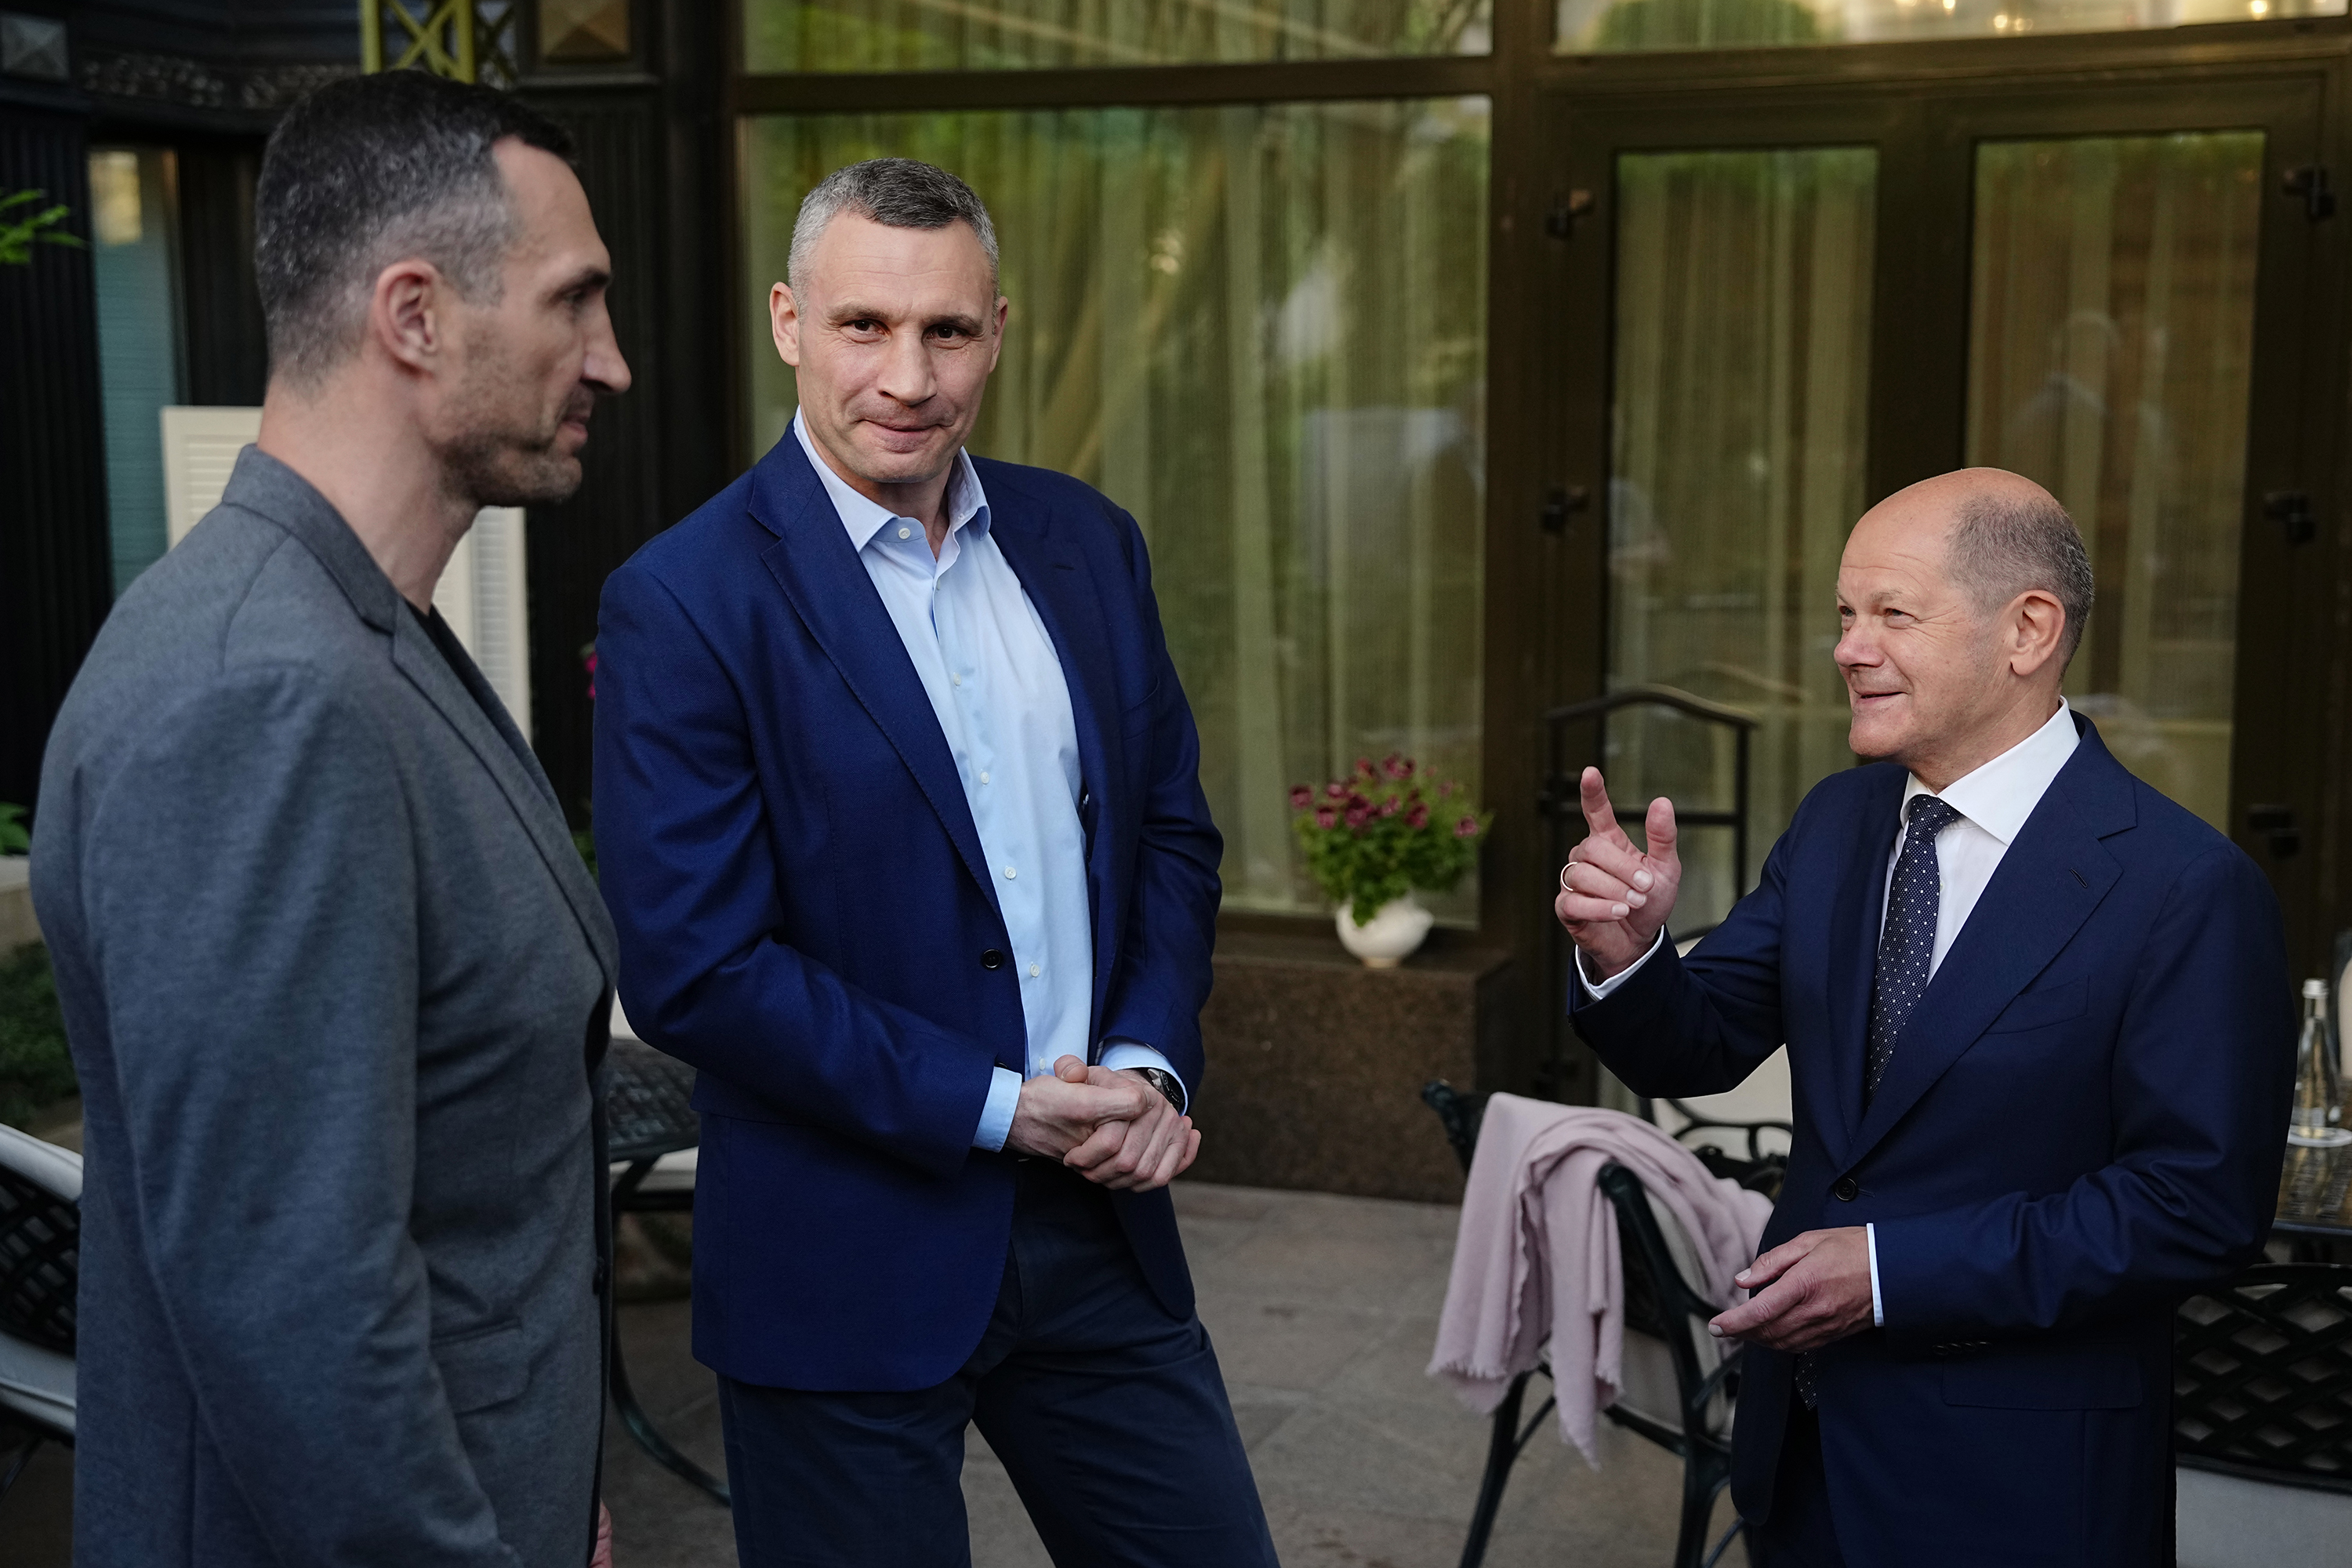 Kyiv Mayor Vitali Klitschko (M) and his brother Vladimir Klitschko (L) talk with German Chancellor Olaf Scholz on Thursday in Kyiv, Ukraine.